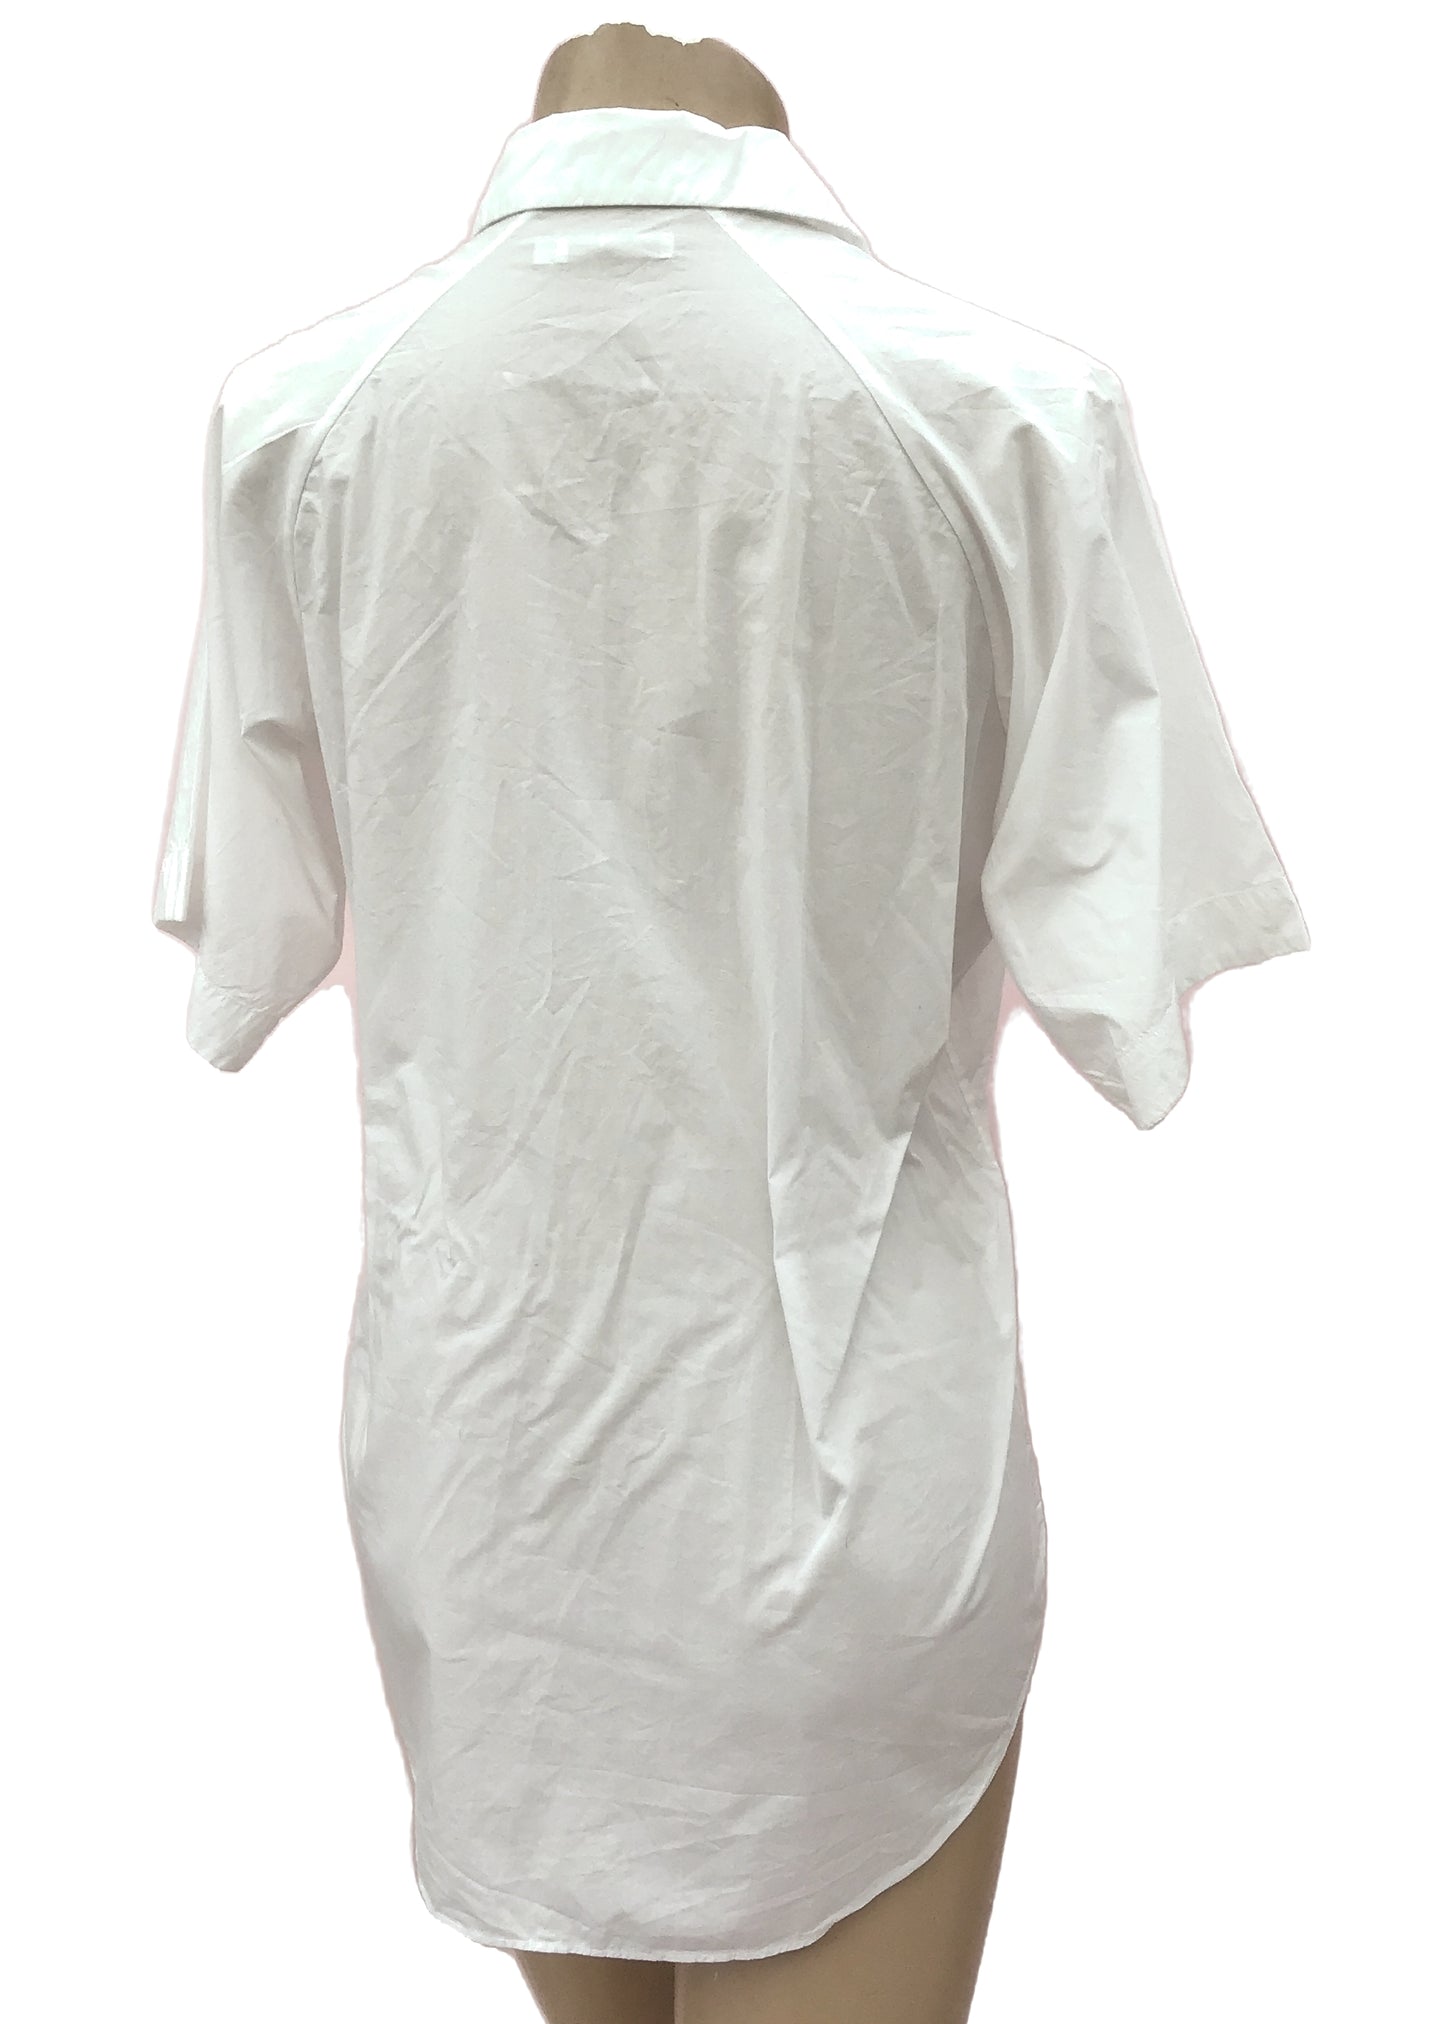 Vintage Cos White Cotton Short Sleeve Blouse Shirt